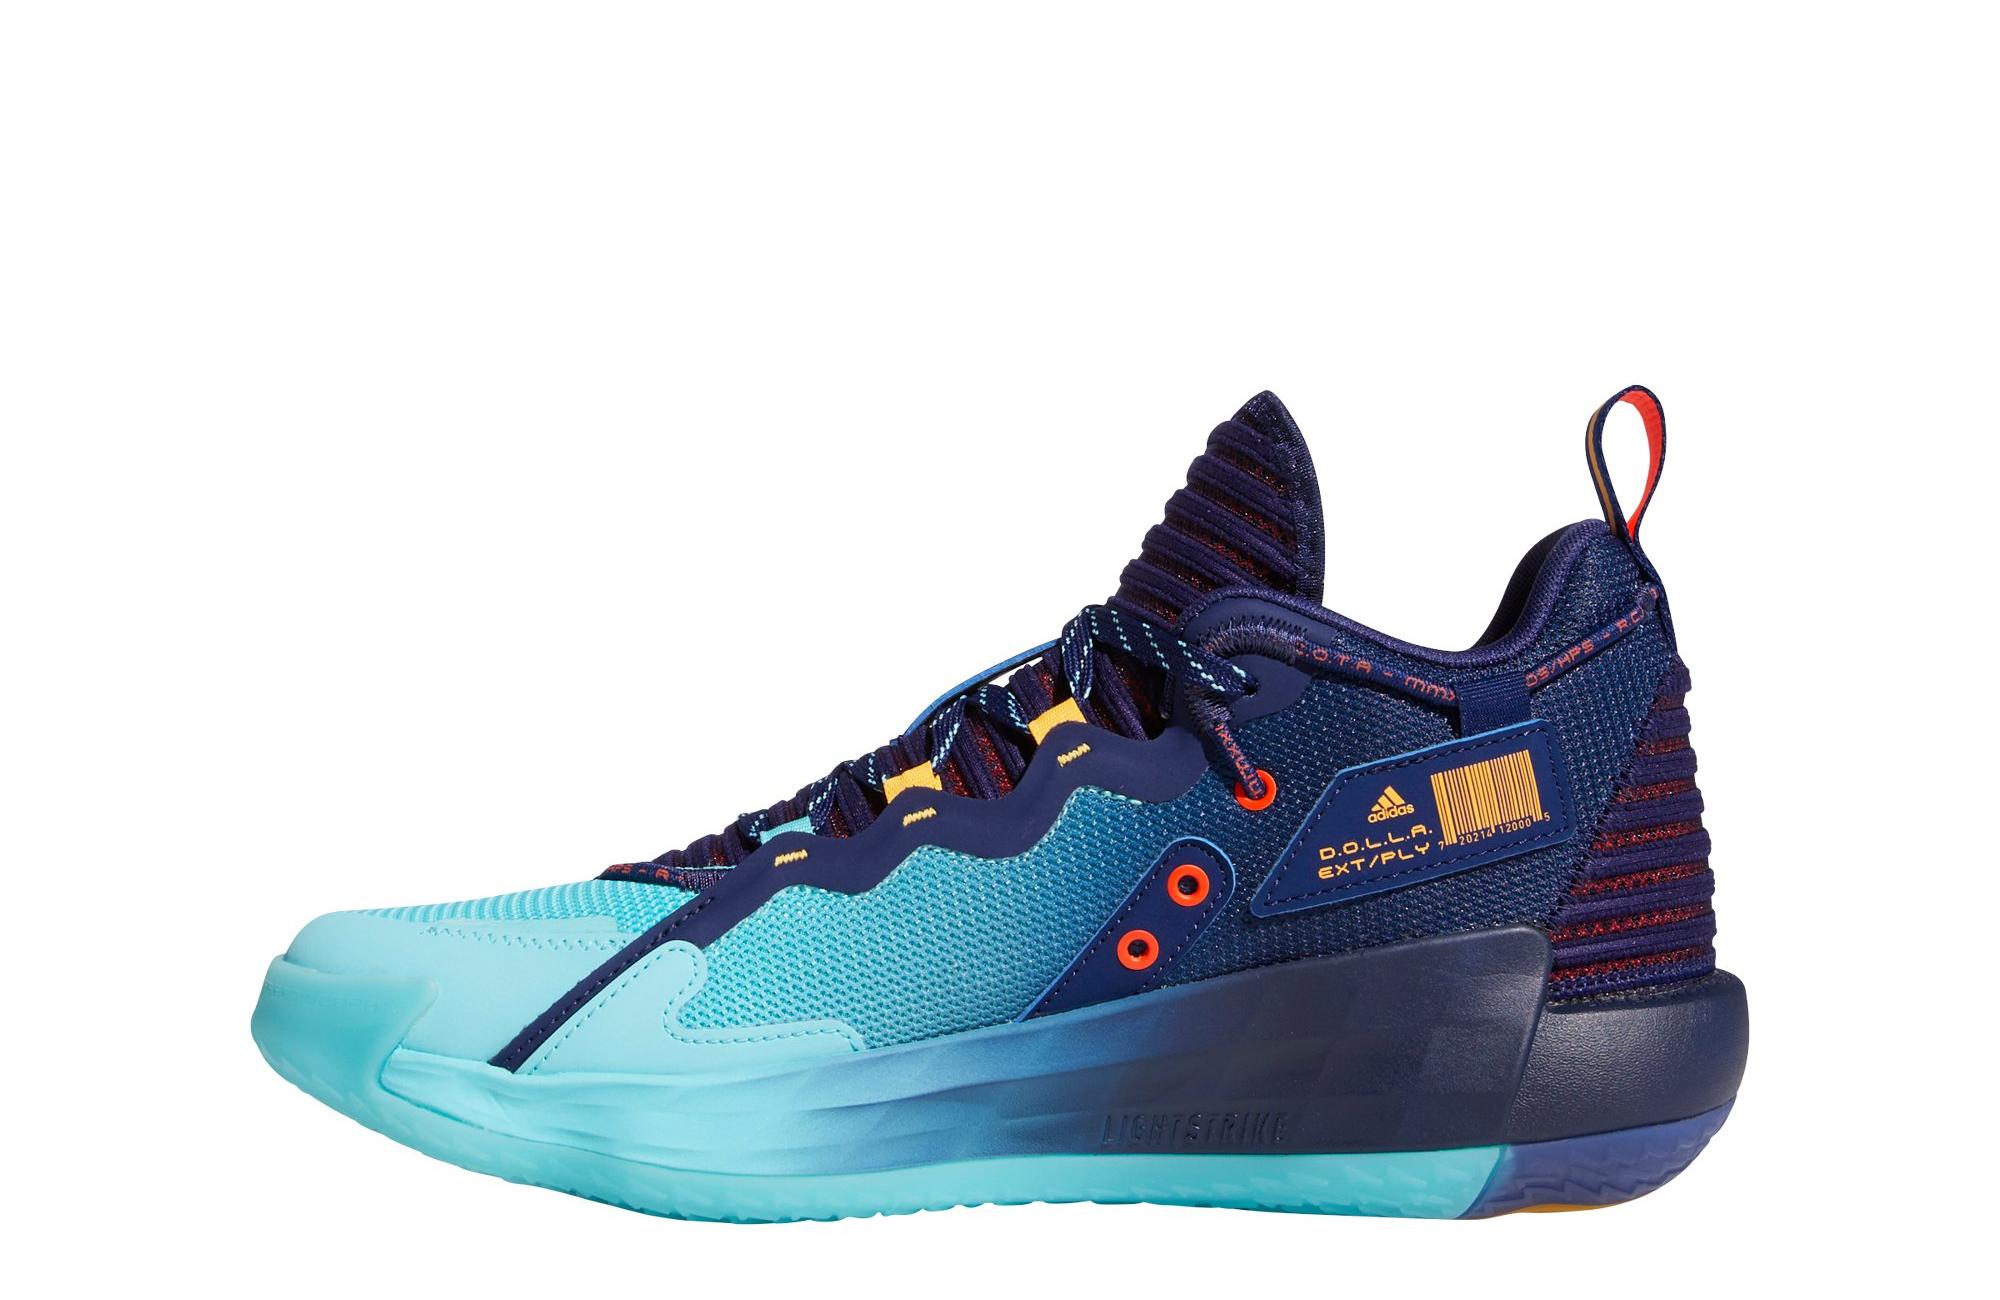 Sneakers Release – adidas Dame 7 EXTPLY “Space Jam” Dark Blue/Aqua ...